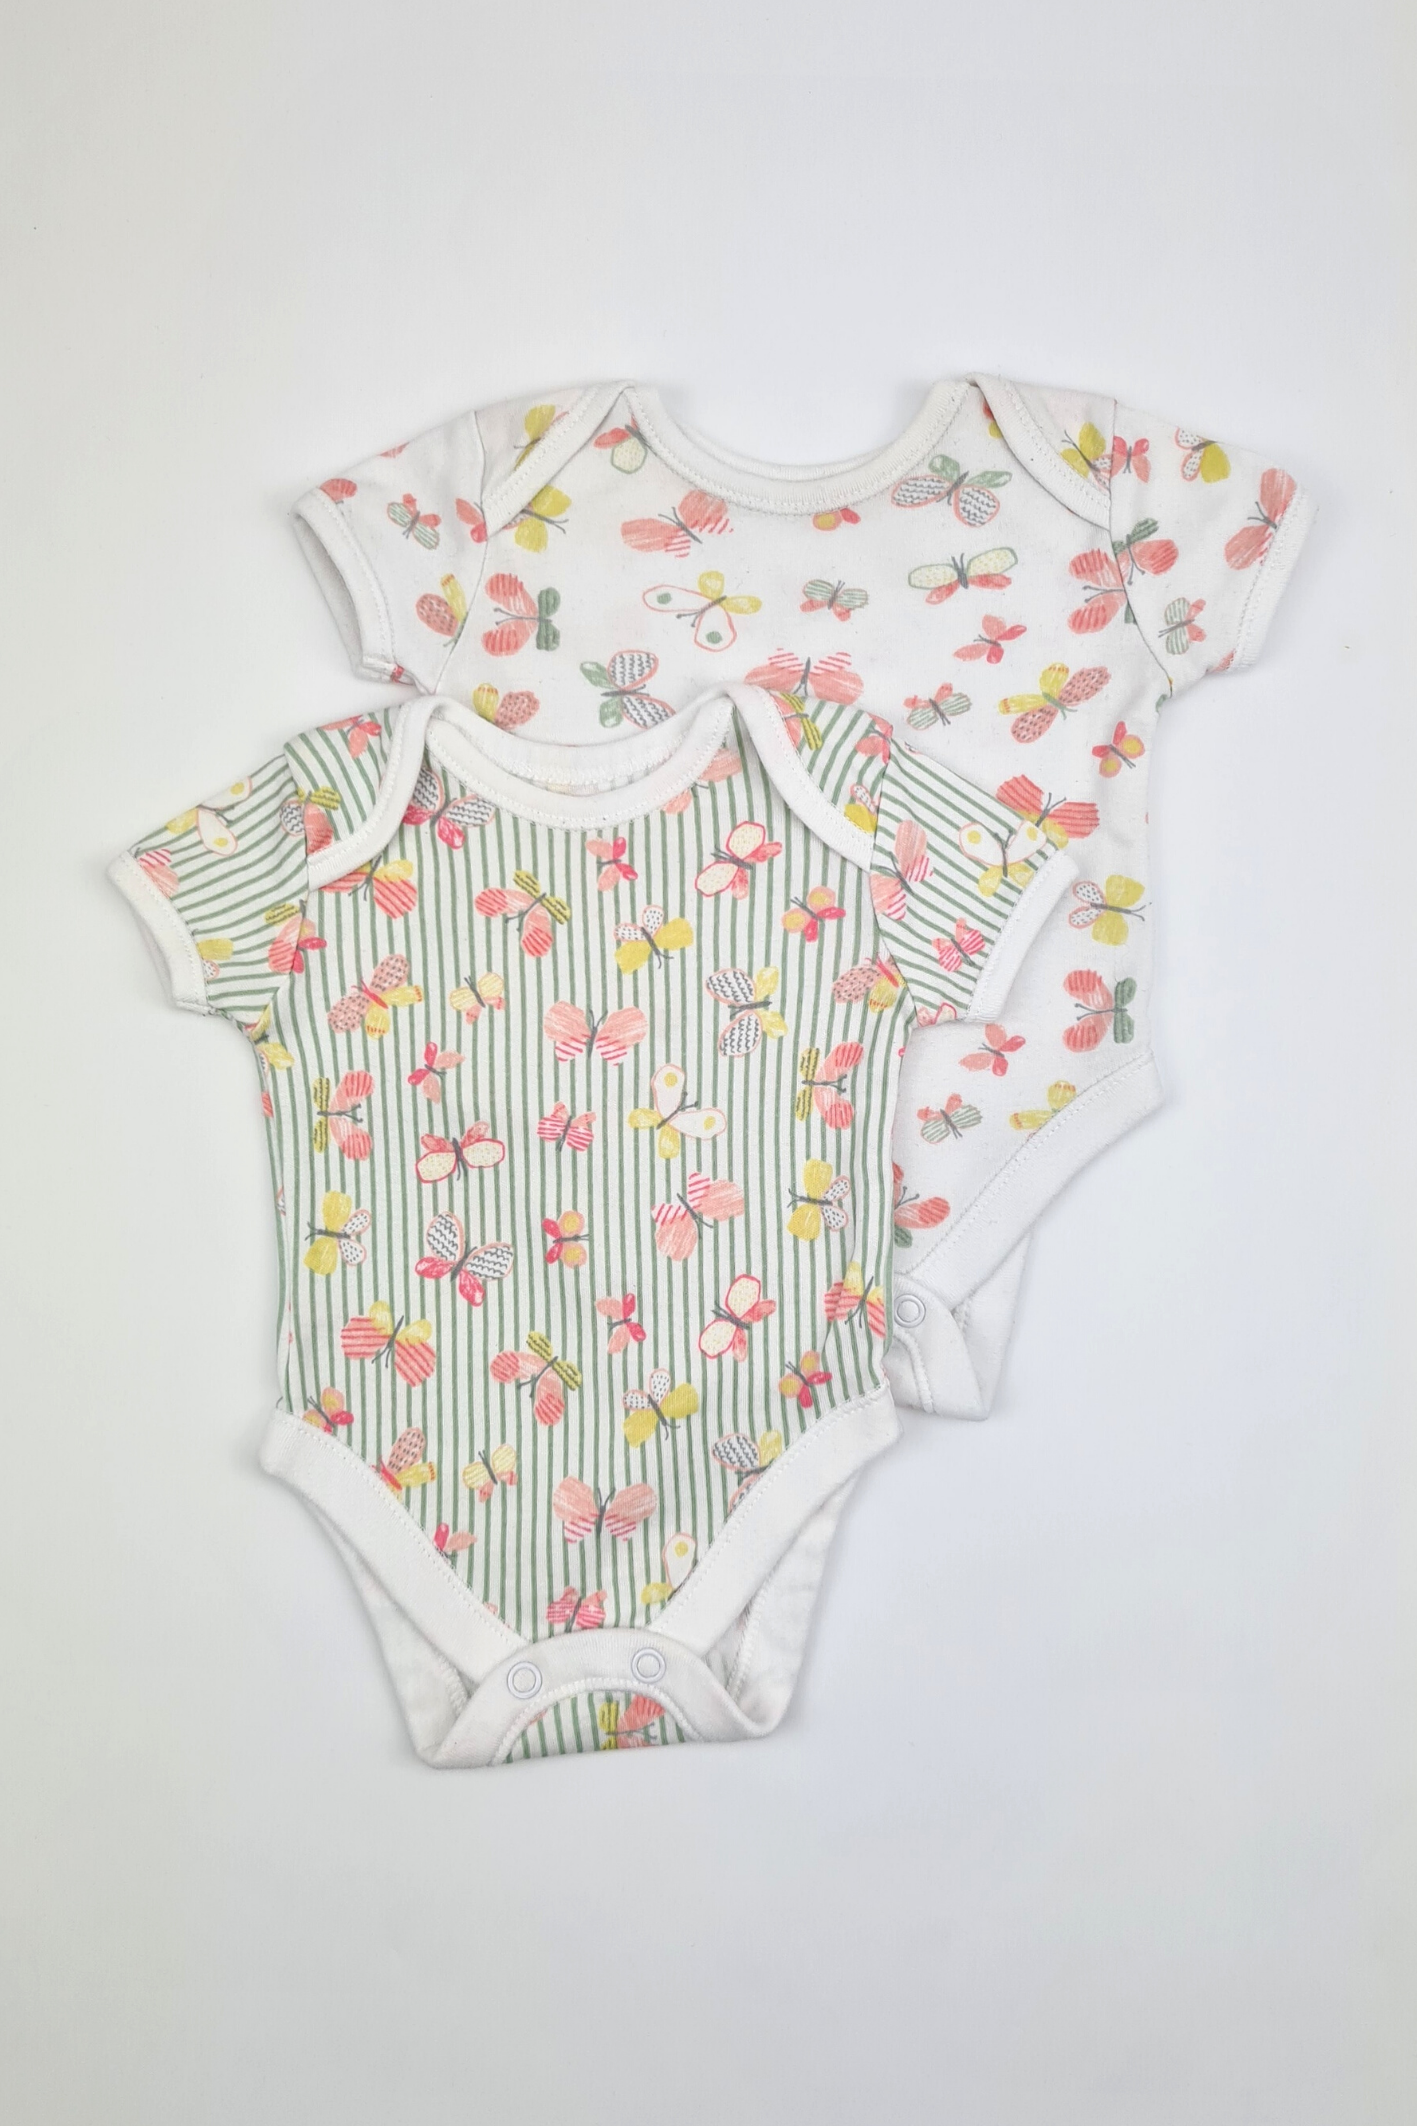 Newborn - 9lbs Butterfly Print Bodysuit (George)